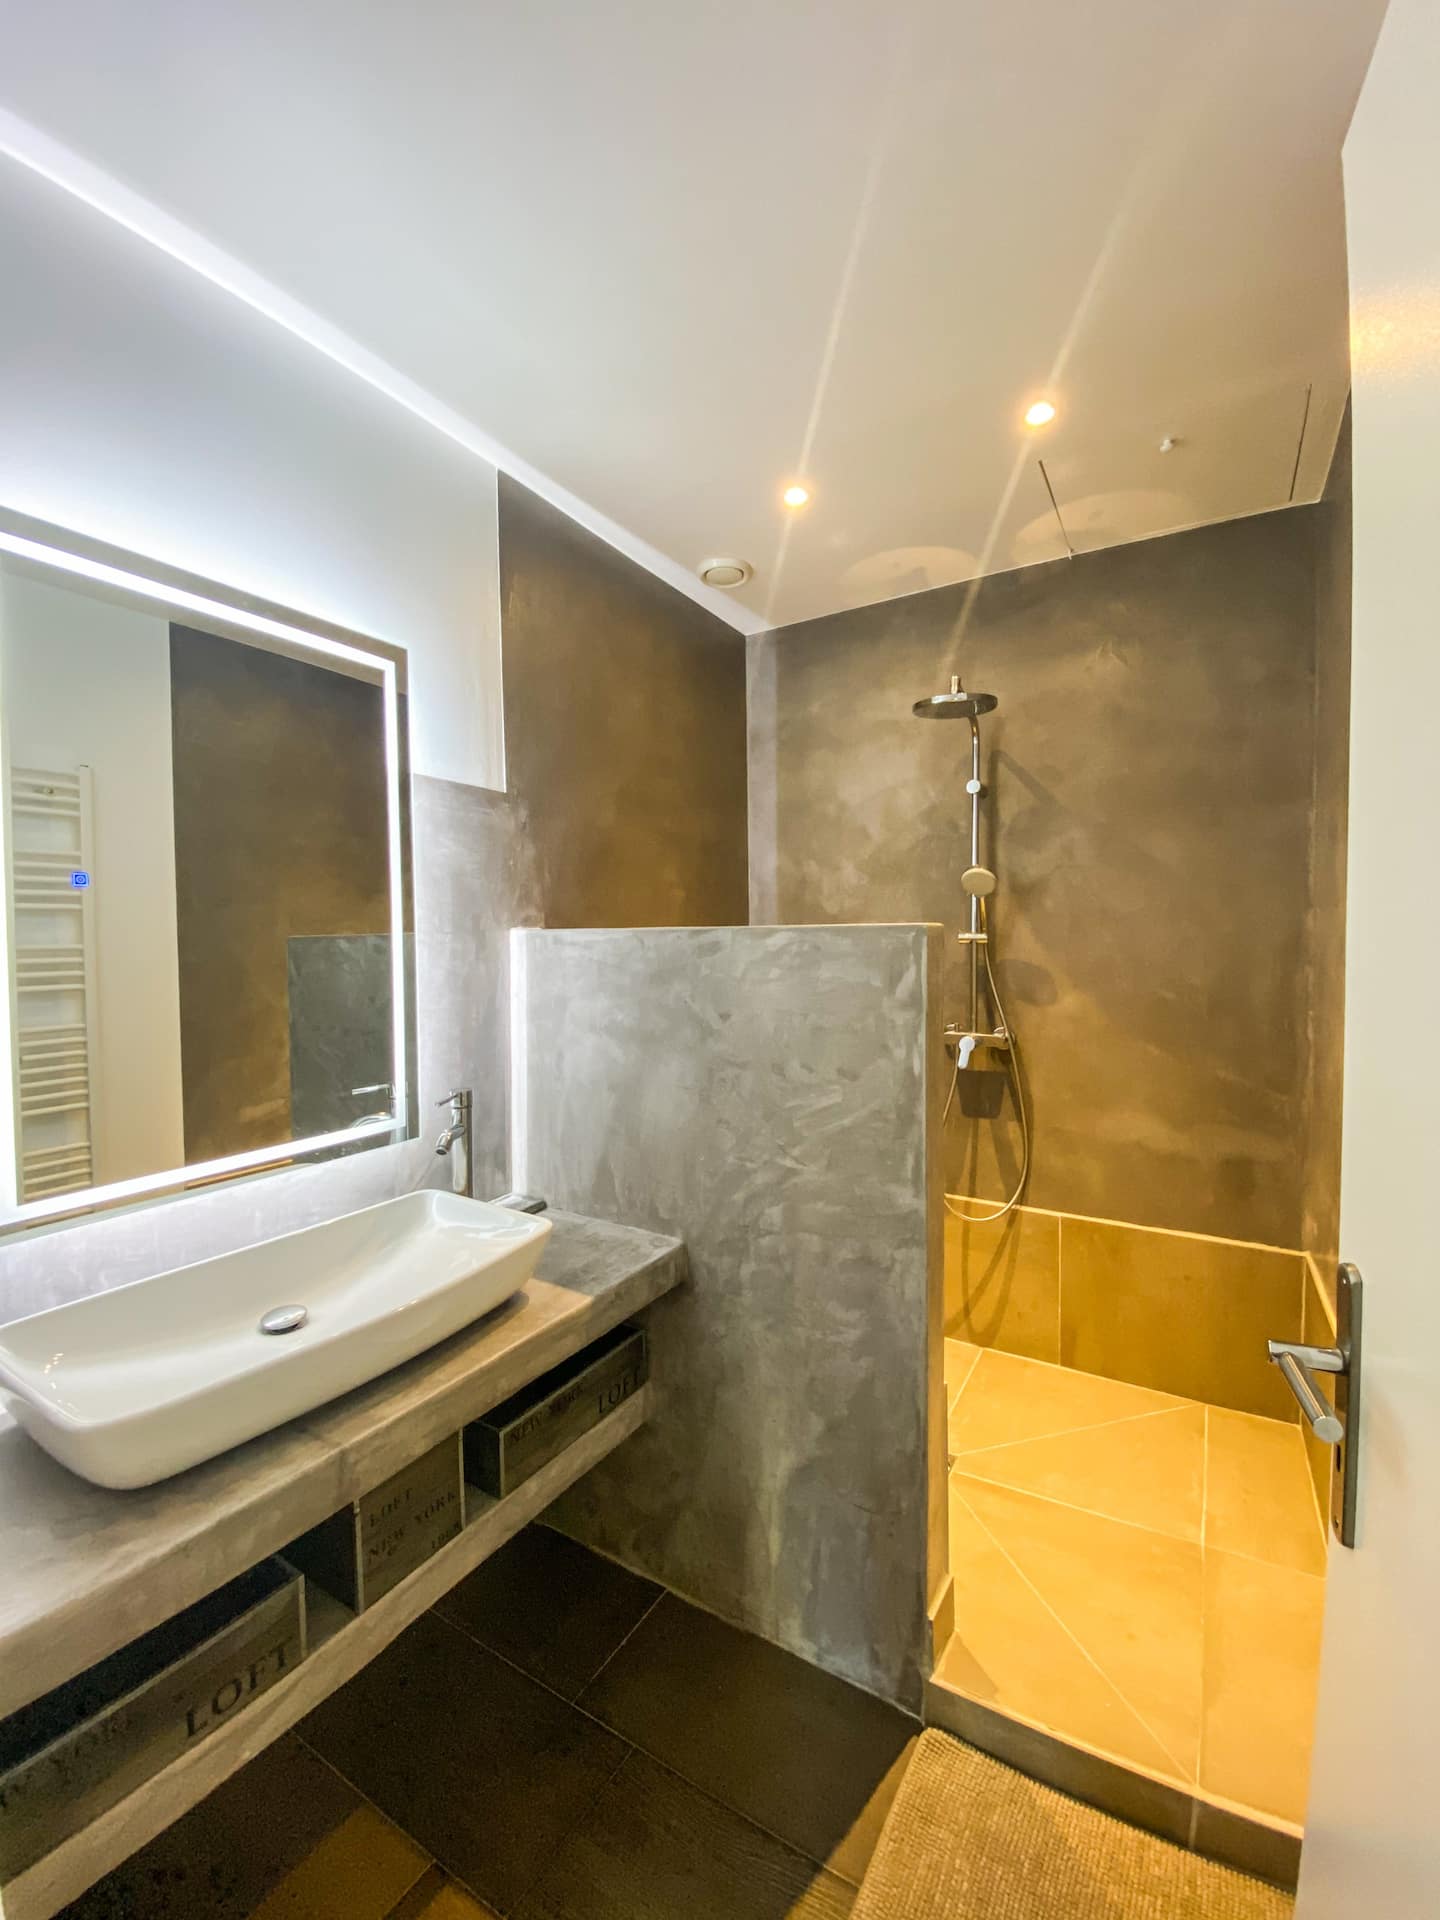 Villa Drossa - La salle de bain de l'appartement